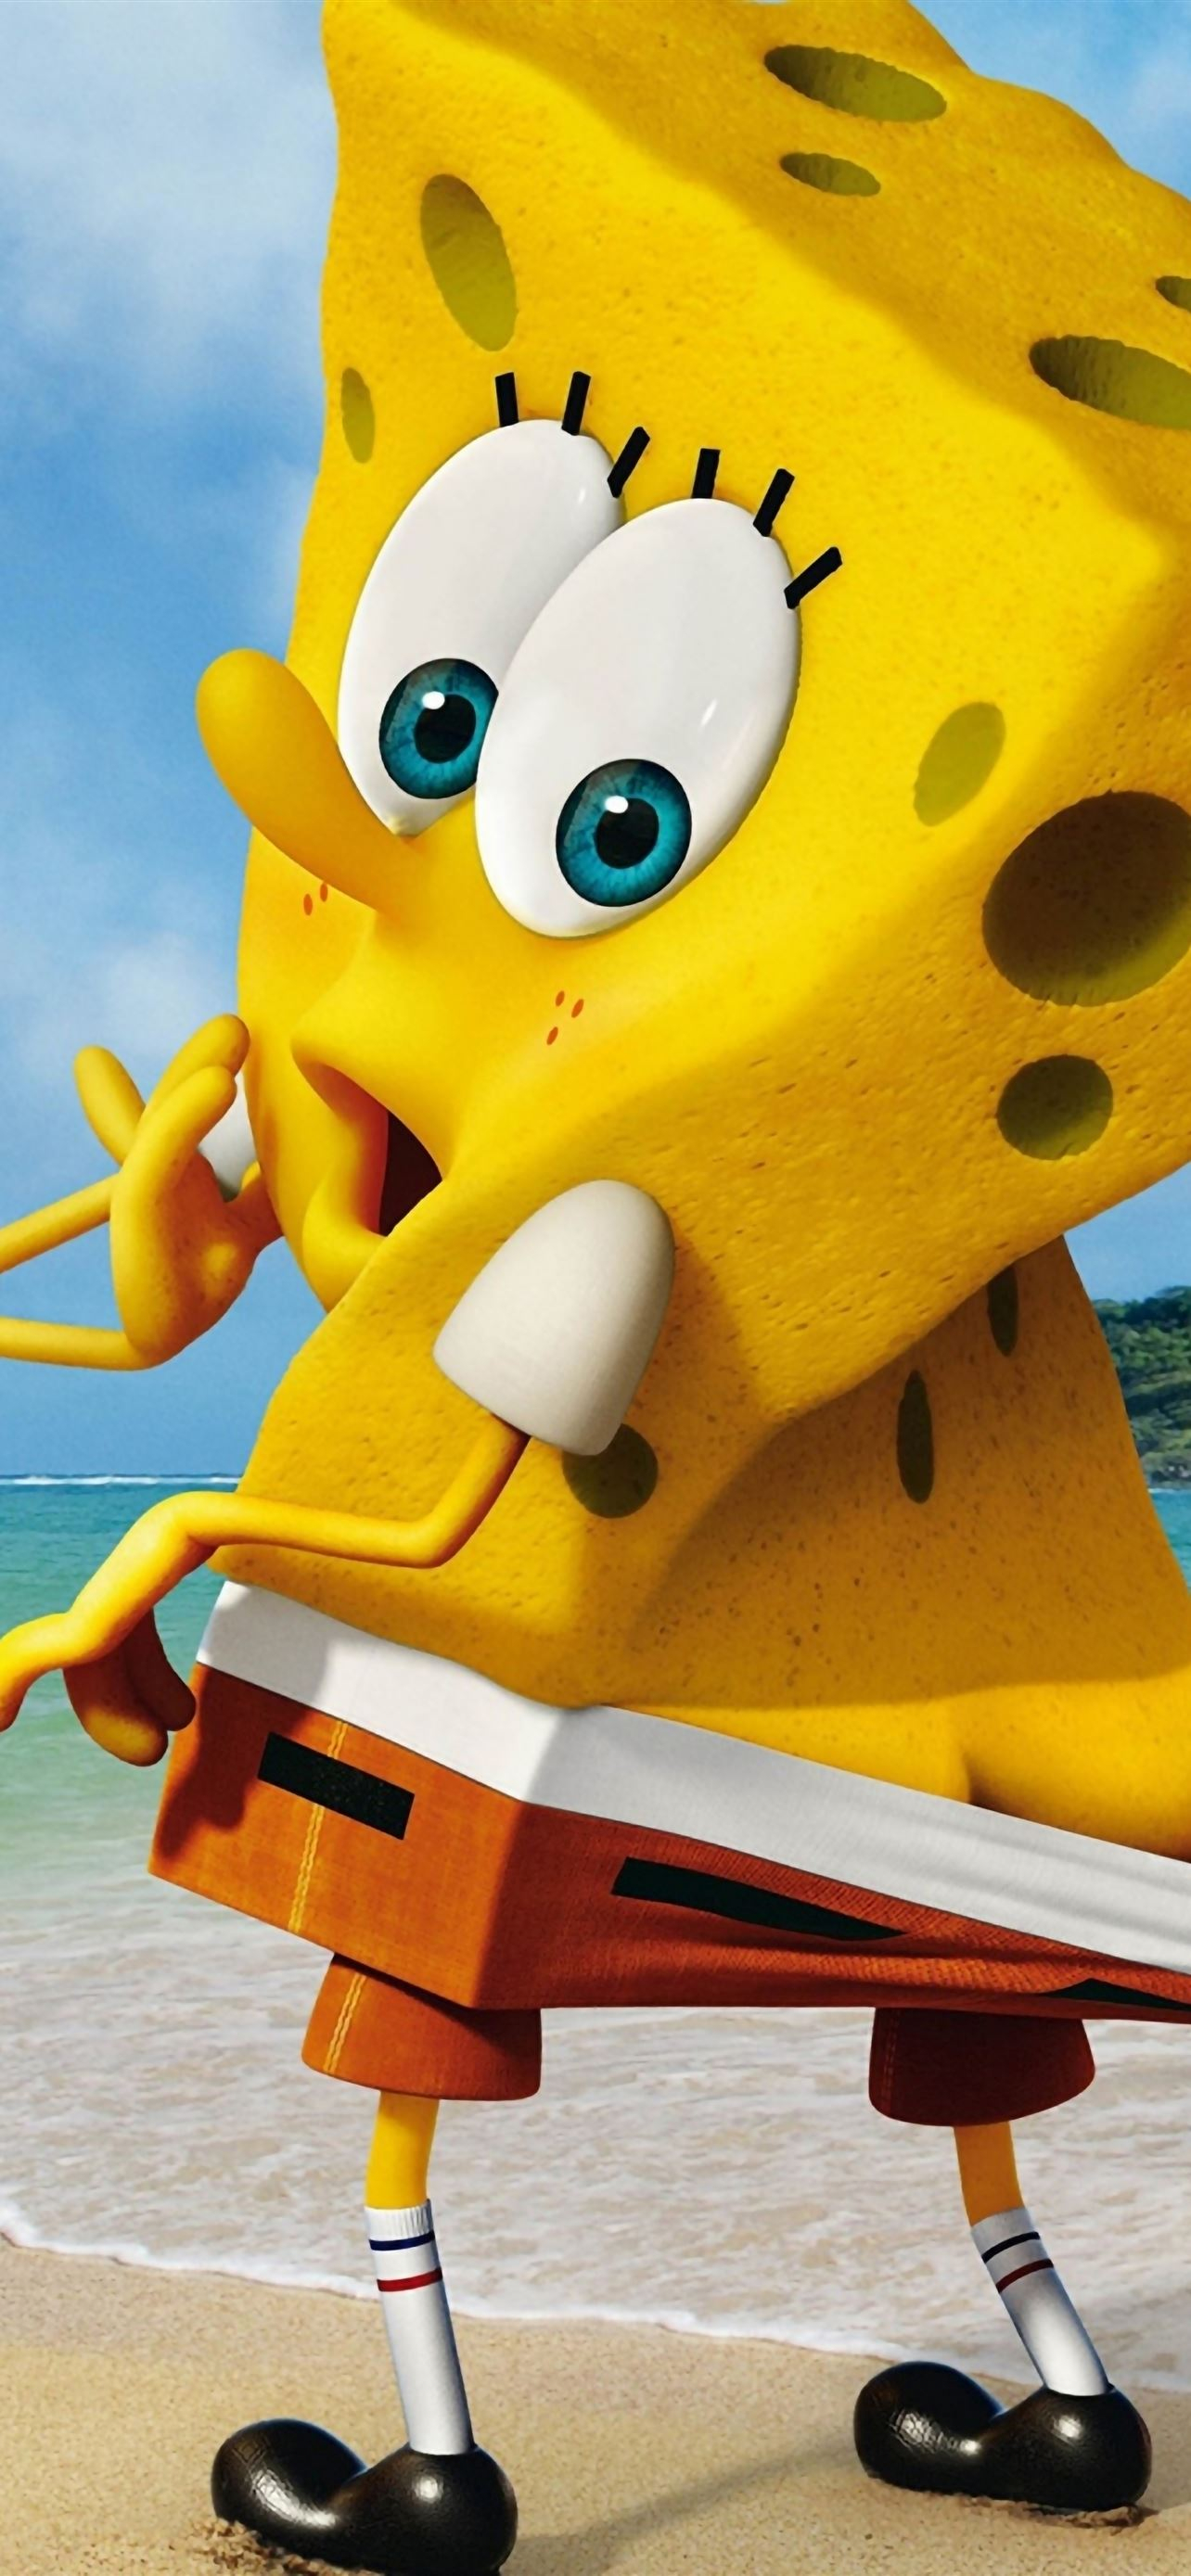 1284x2778 Funny Spongebob Squarepants iPhone Wallpapers Free Download